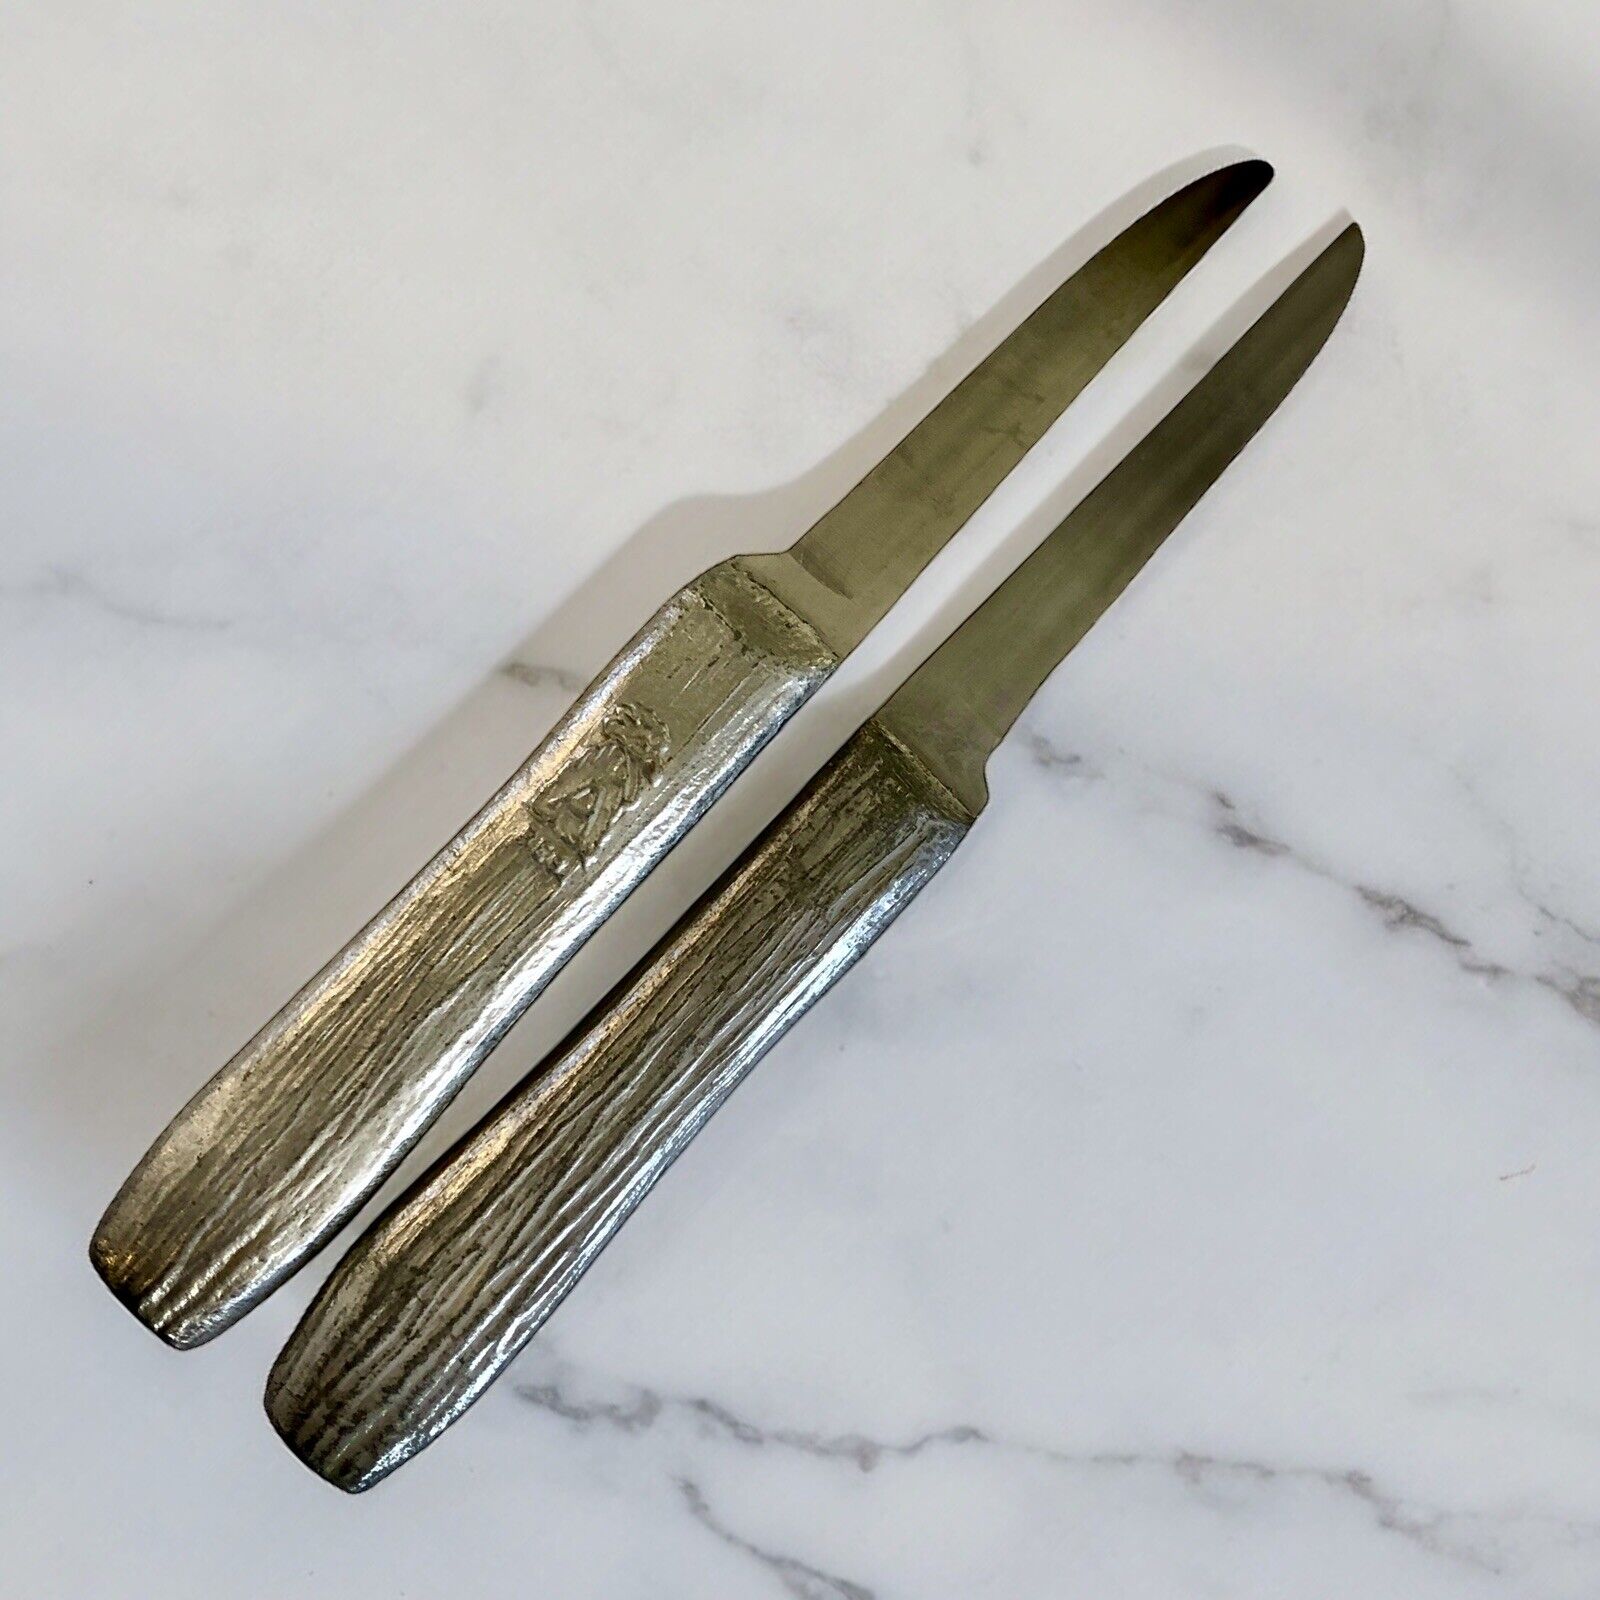 2 Vintage Aycock Aluminum Paring Knives Serrated Metal Handles 6”